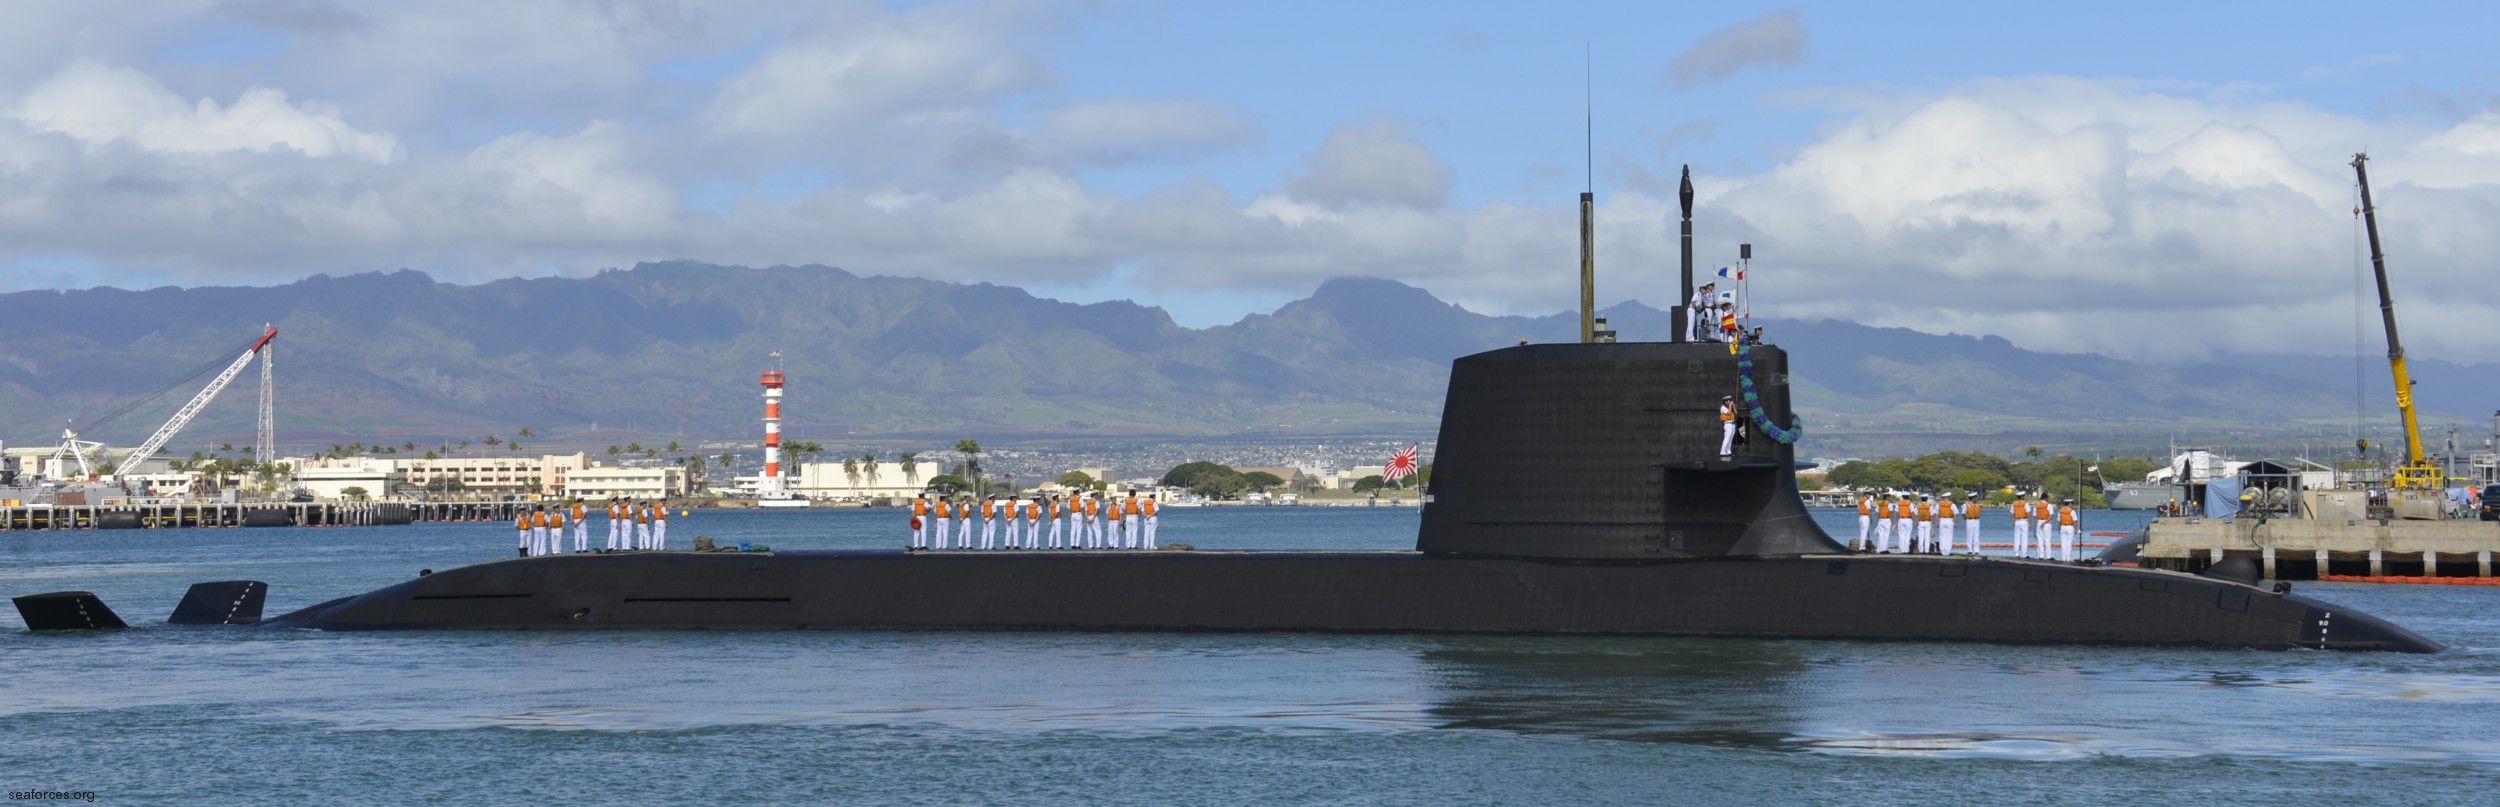 ss-503 js hakuryu 16ss soryu class attack submarine ssk japan maritime self defense force jmsdf 09